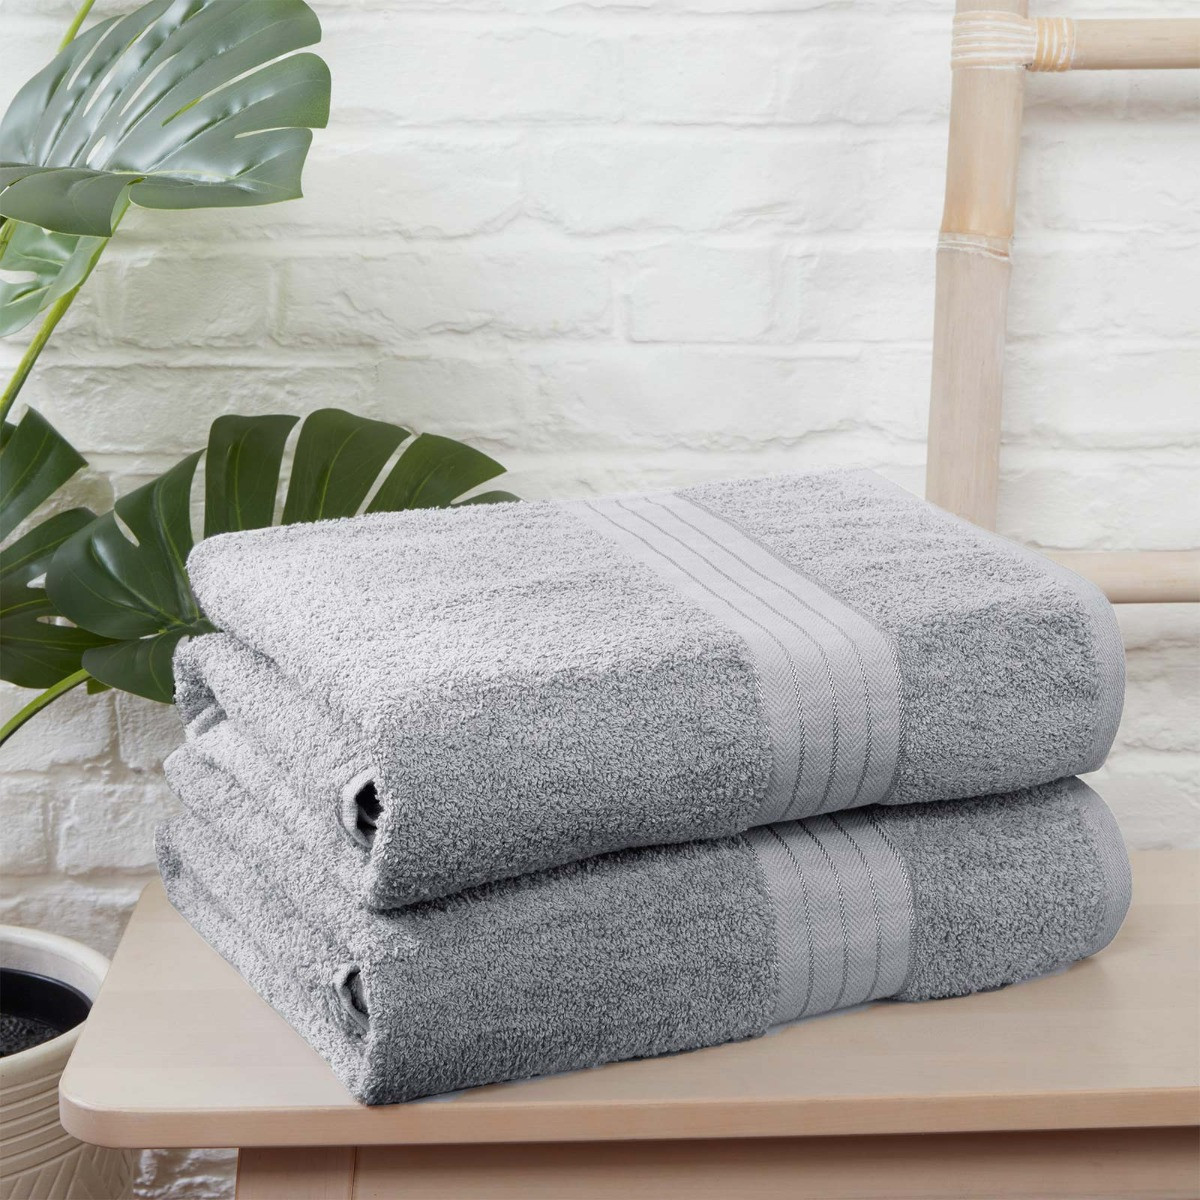 Luxury 100% Cotton 2 Jumbo Bath Sheets Large Towels Bale - Silver>